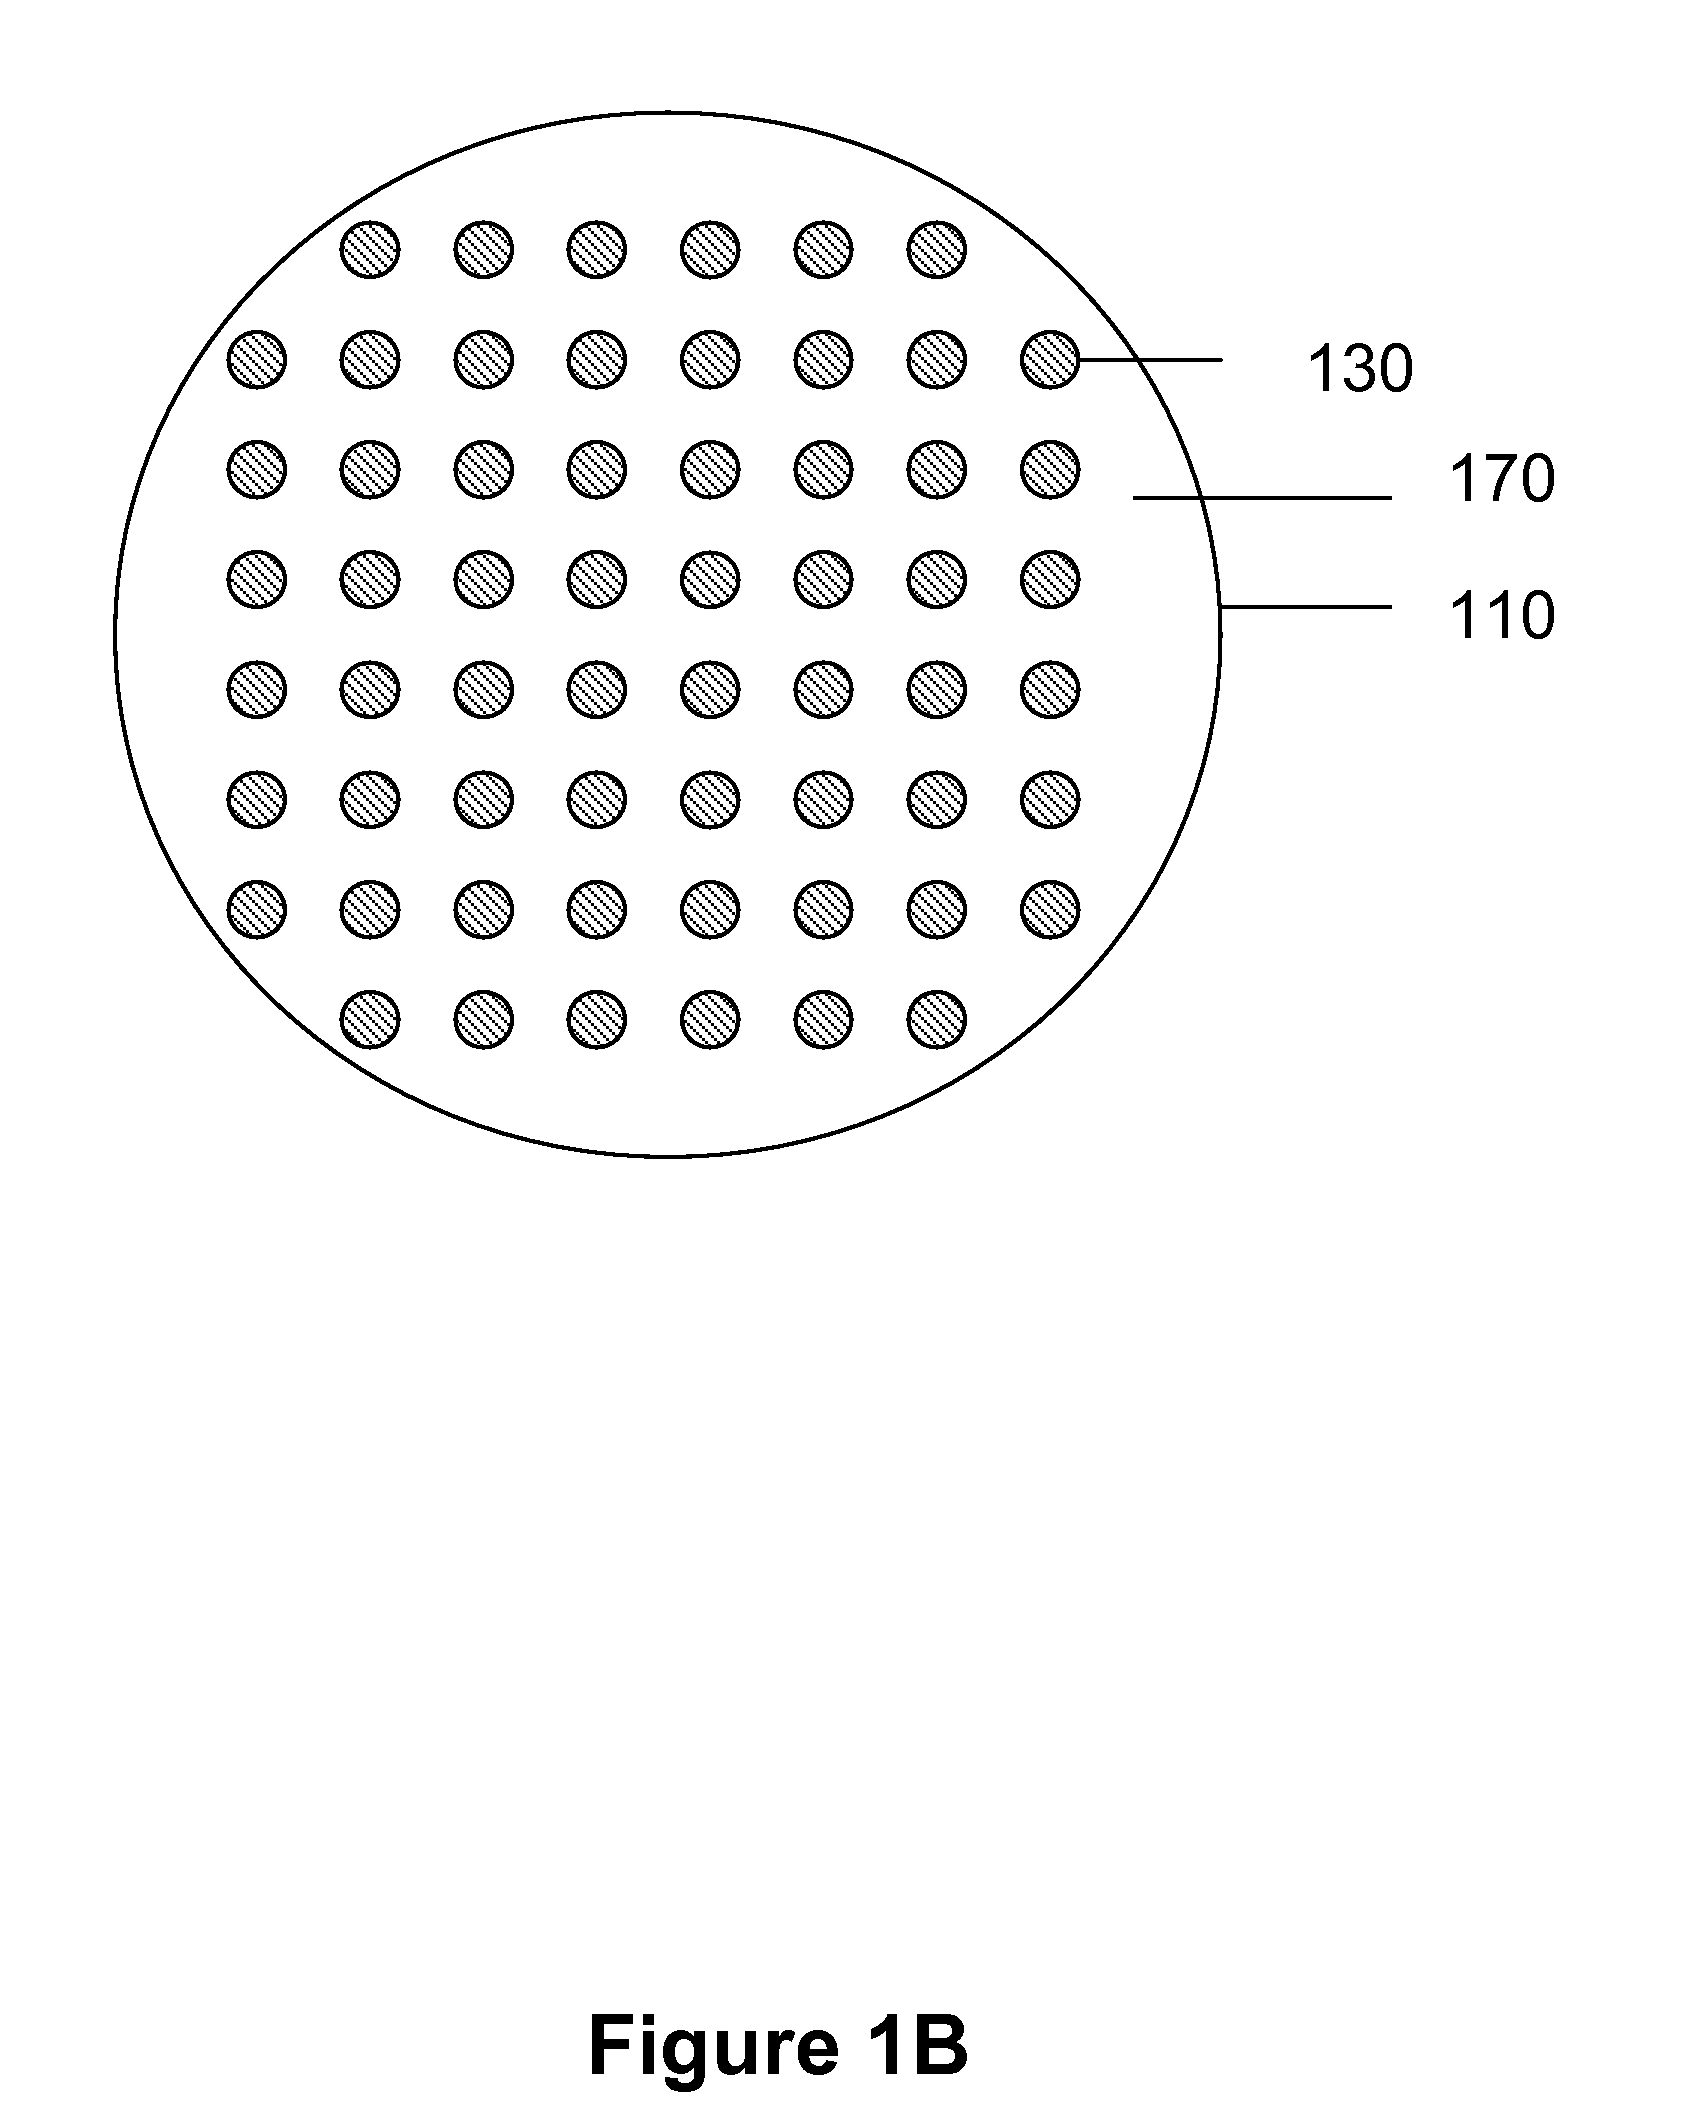 Nanopillar arrays for electron emission